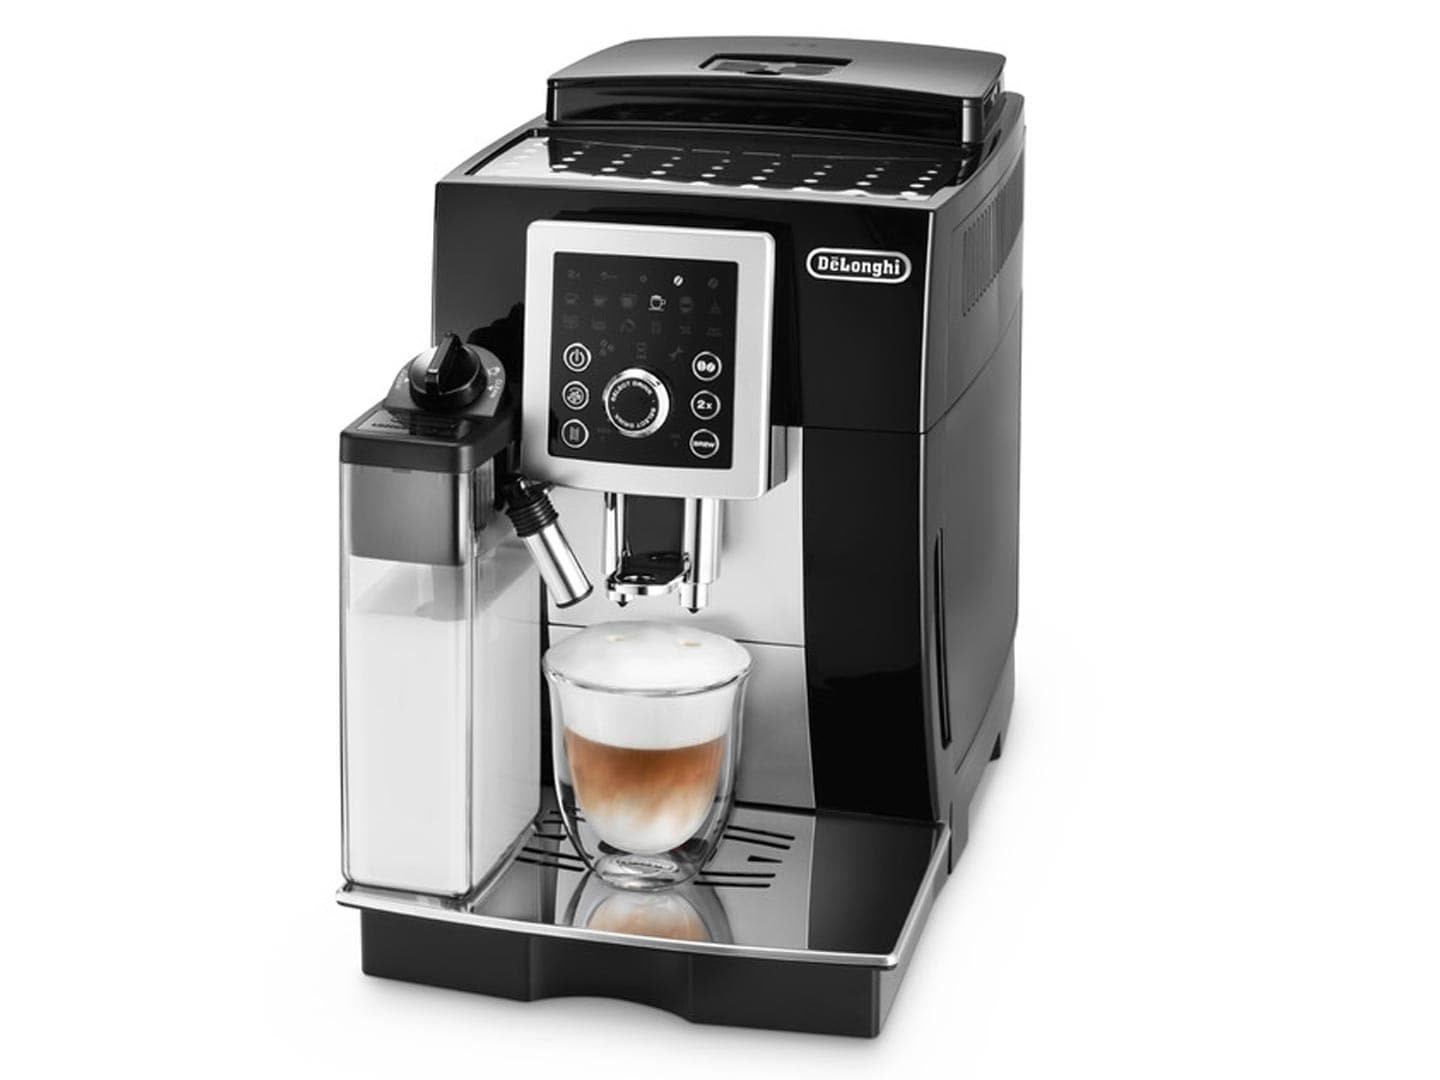 Automatický kávovar DeLonghi ECAM 23.260.B | AB-COM.cz